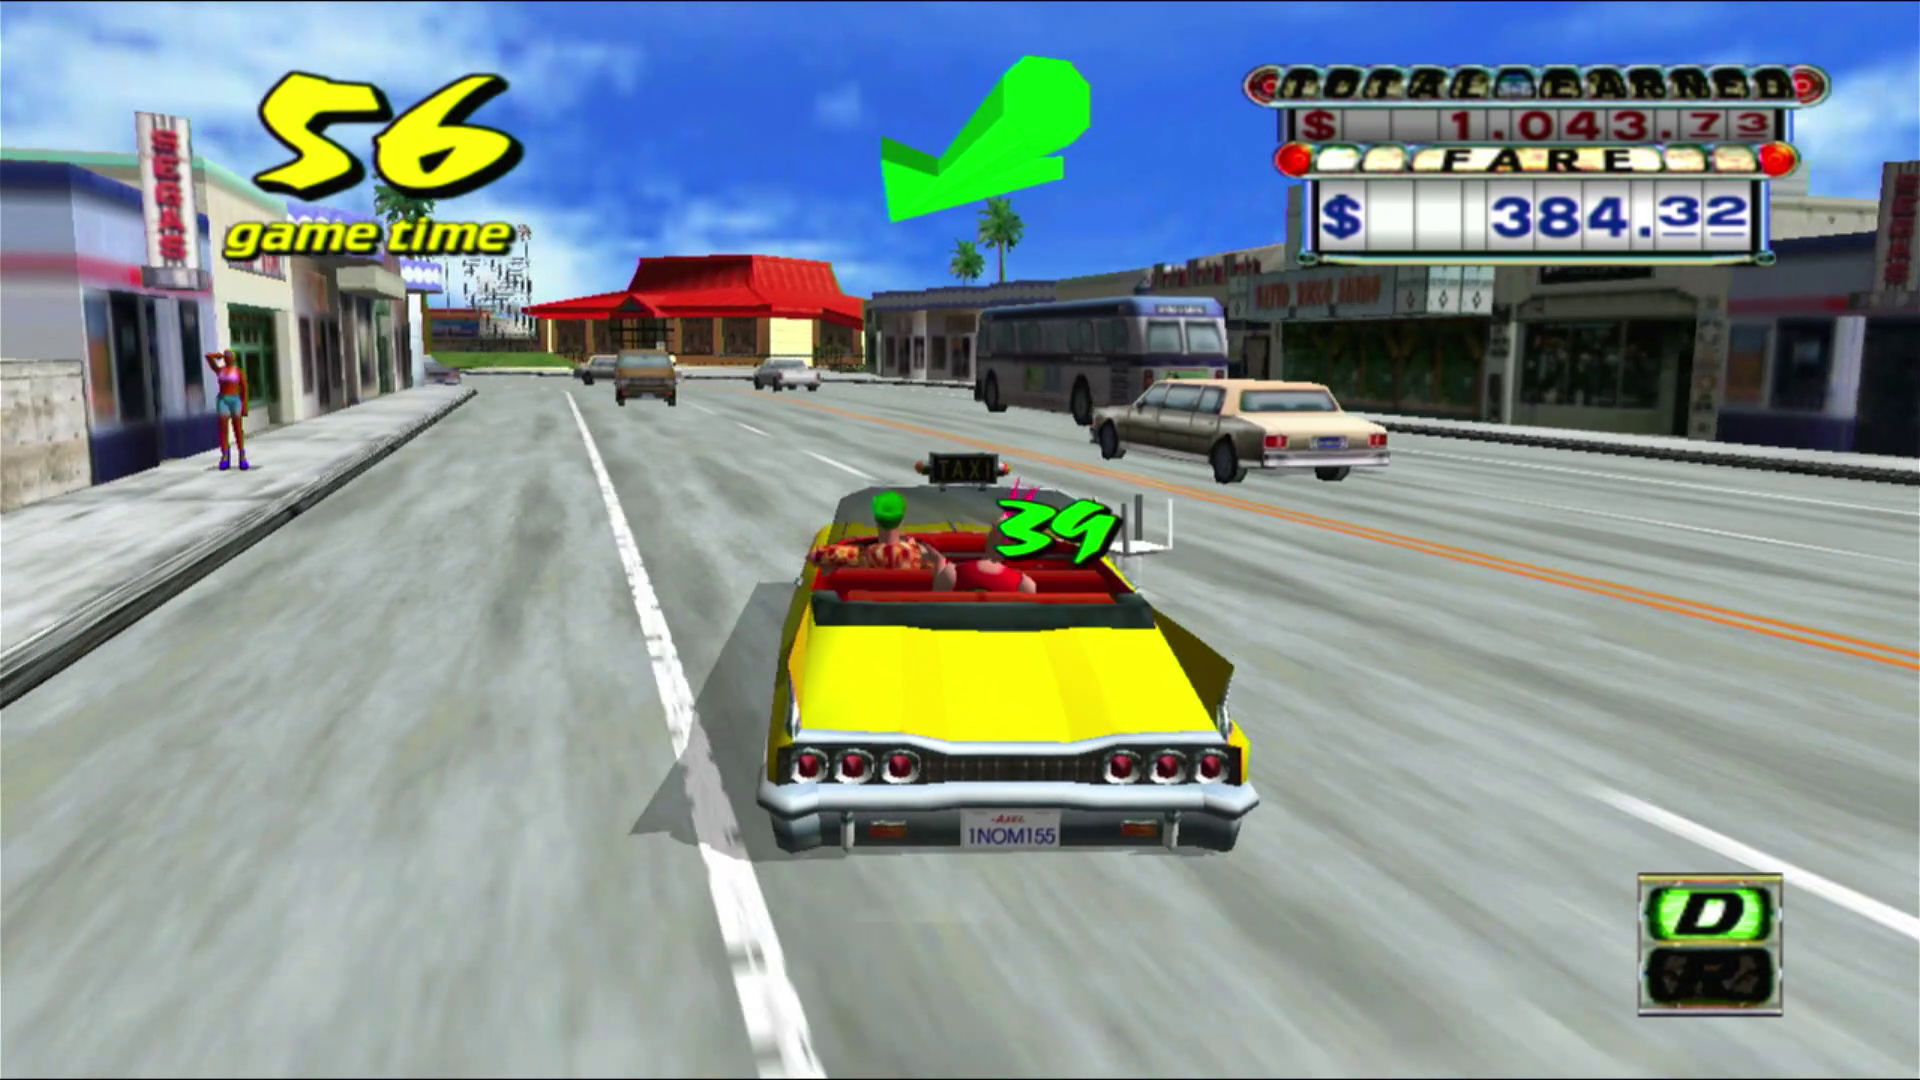 Crazy Taxi gameplay videos